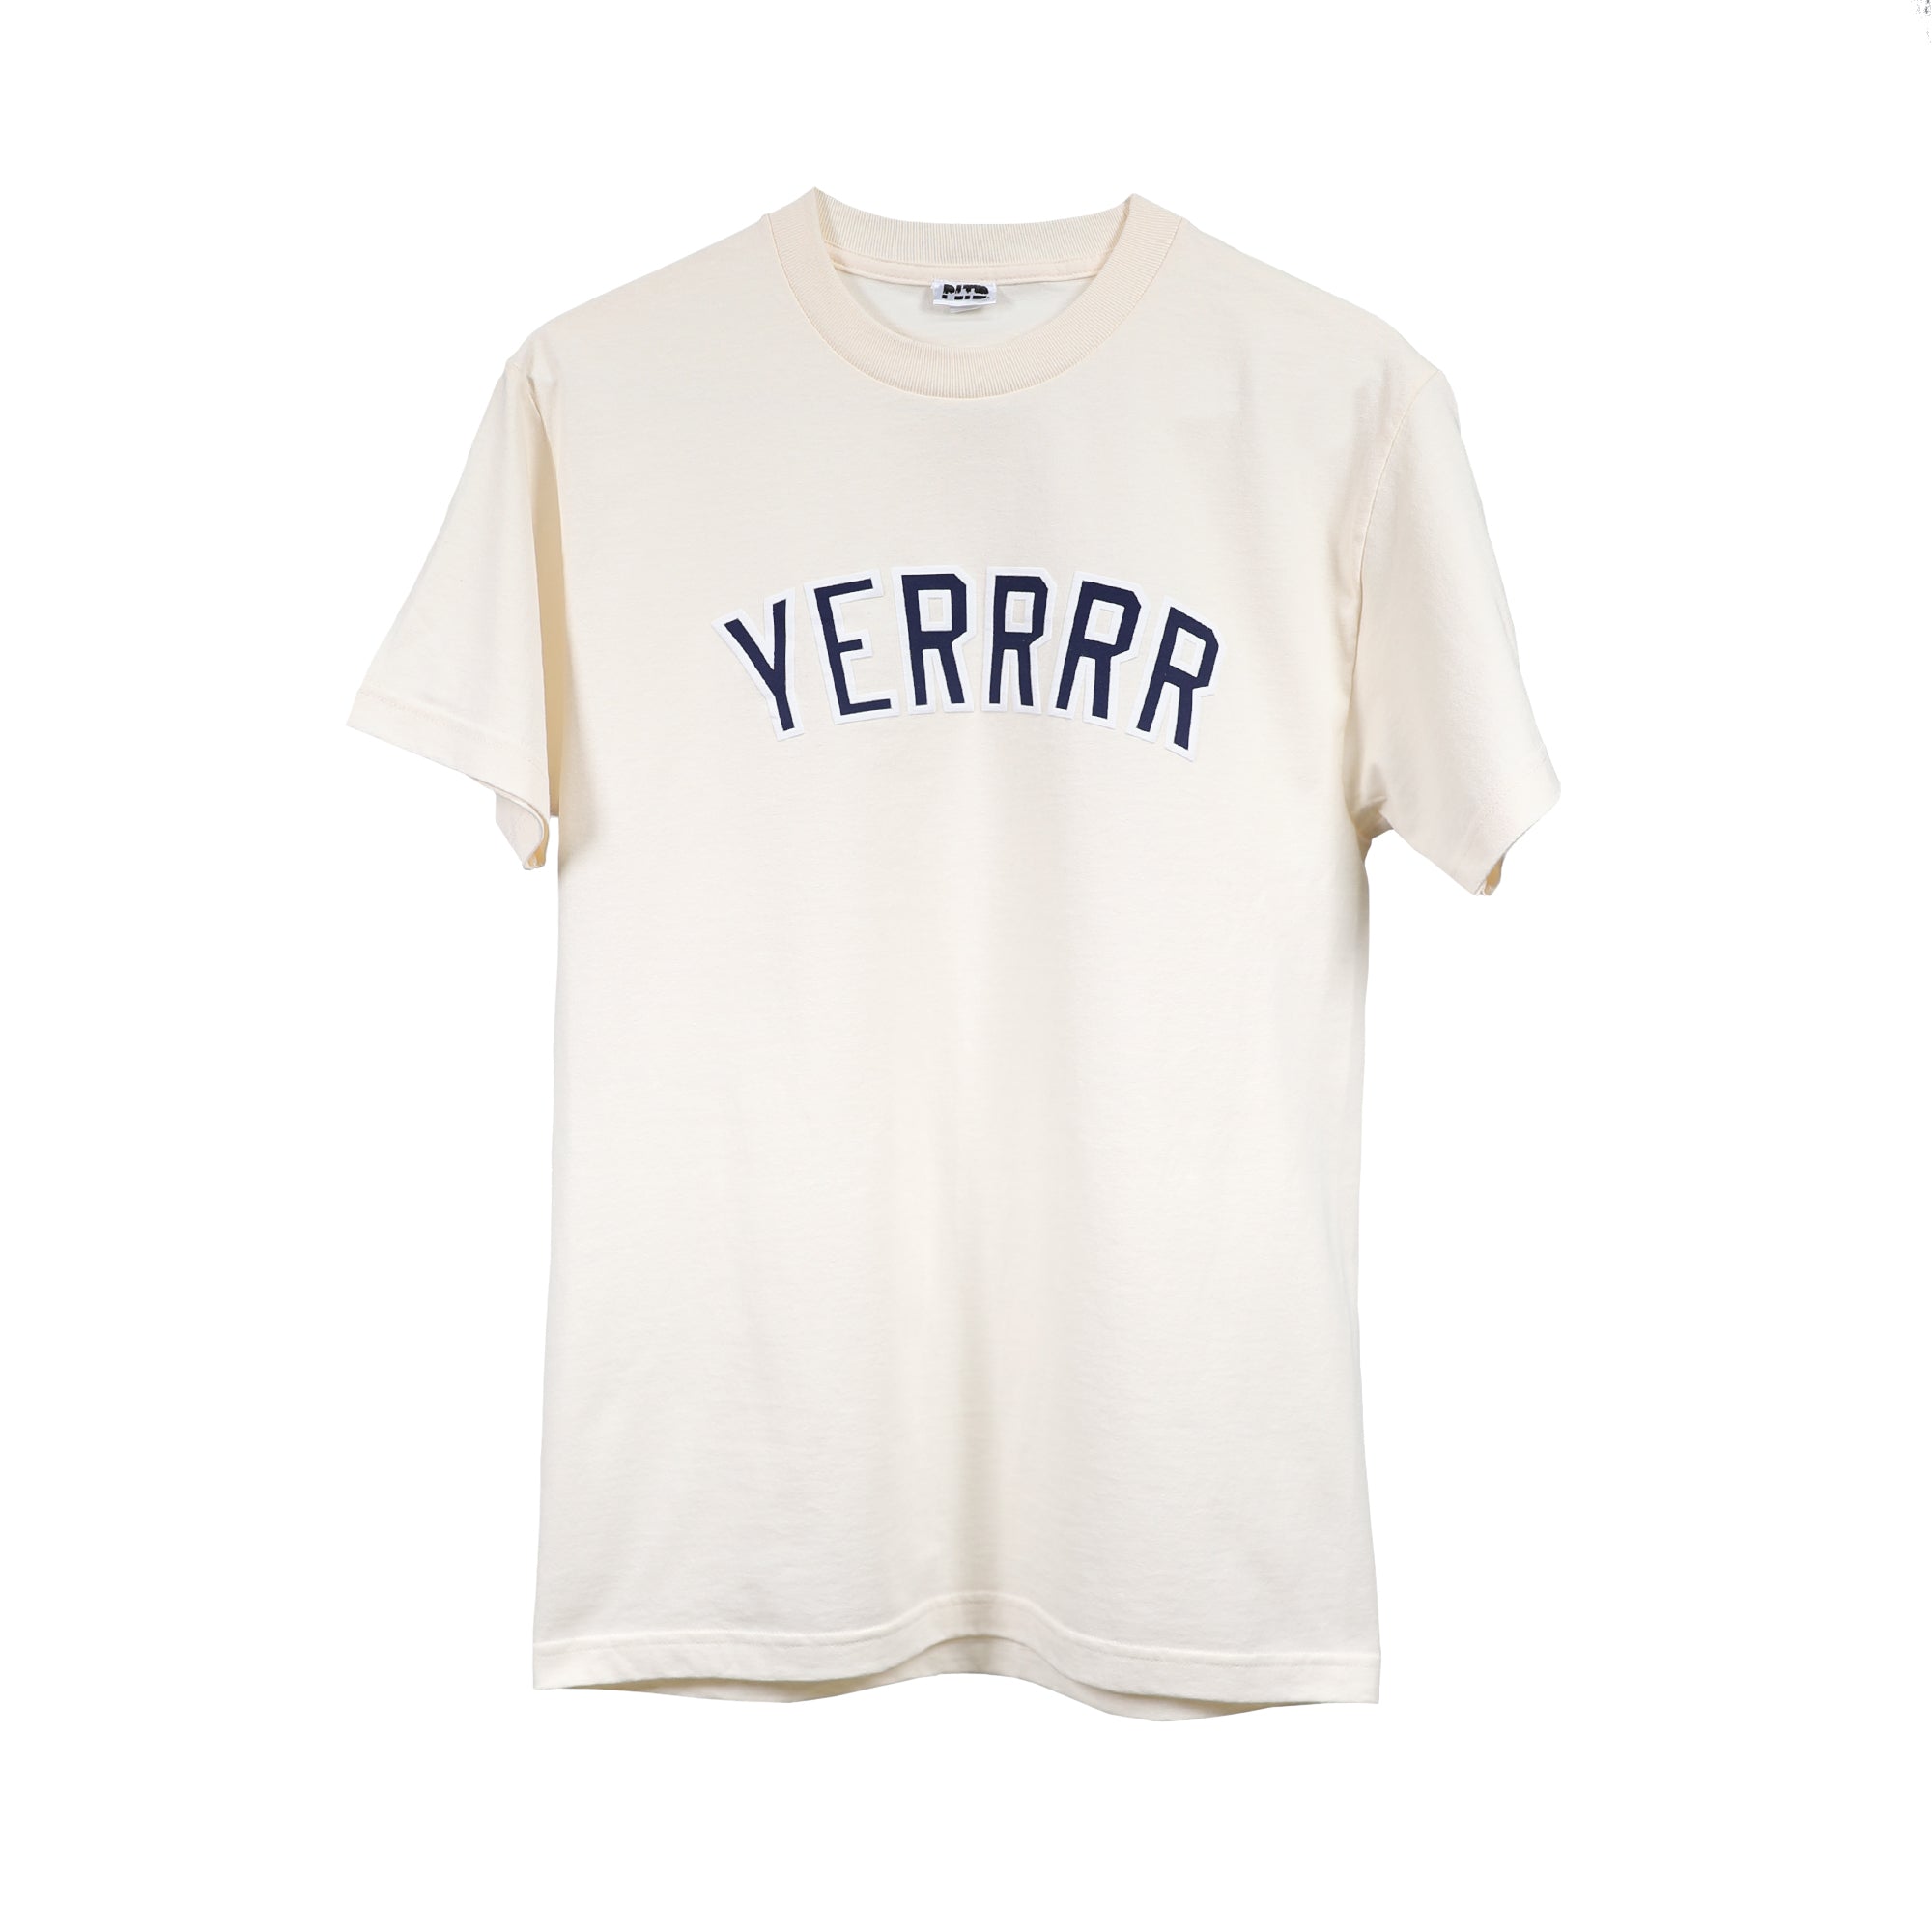 Yerrrr - Yankees Cream S/S